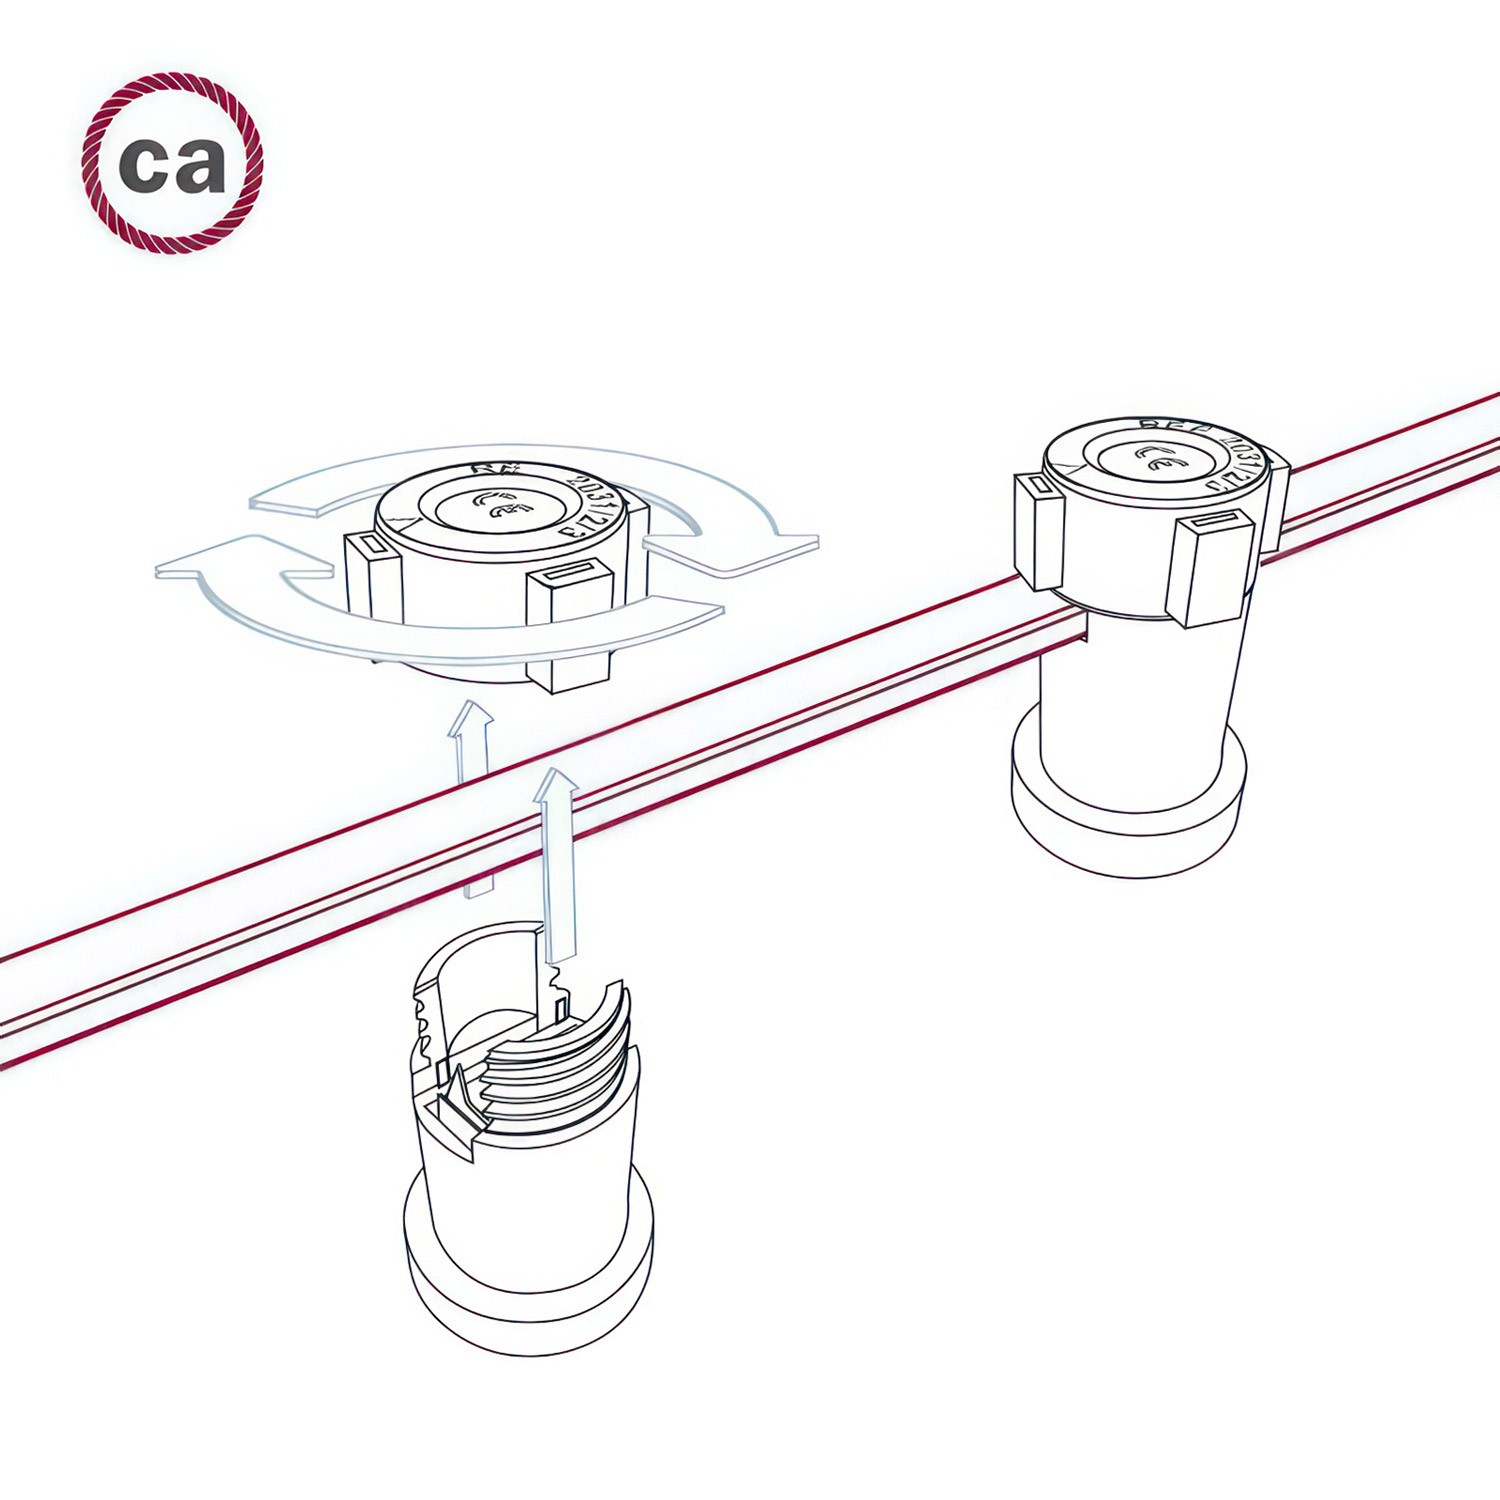 Električni kabel za String Lights, opleten bijelom rajon tkaninom CM01 - UV otporan